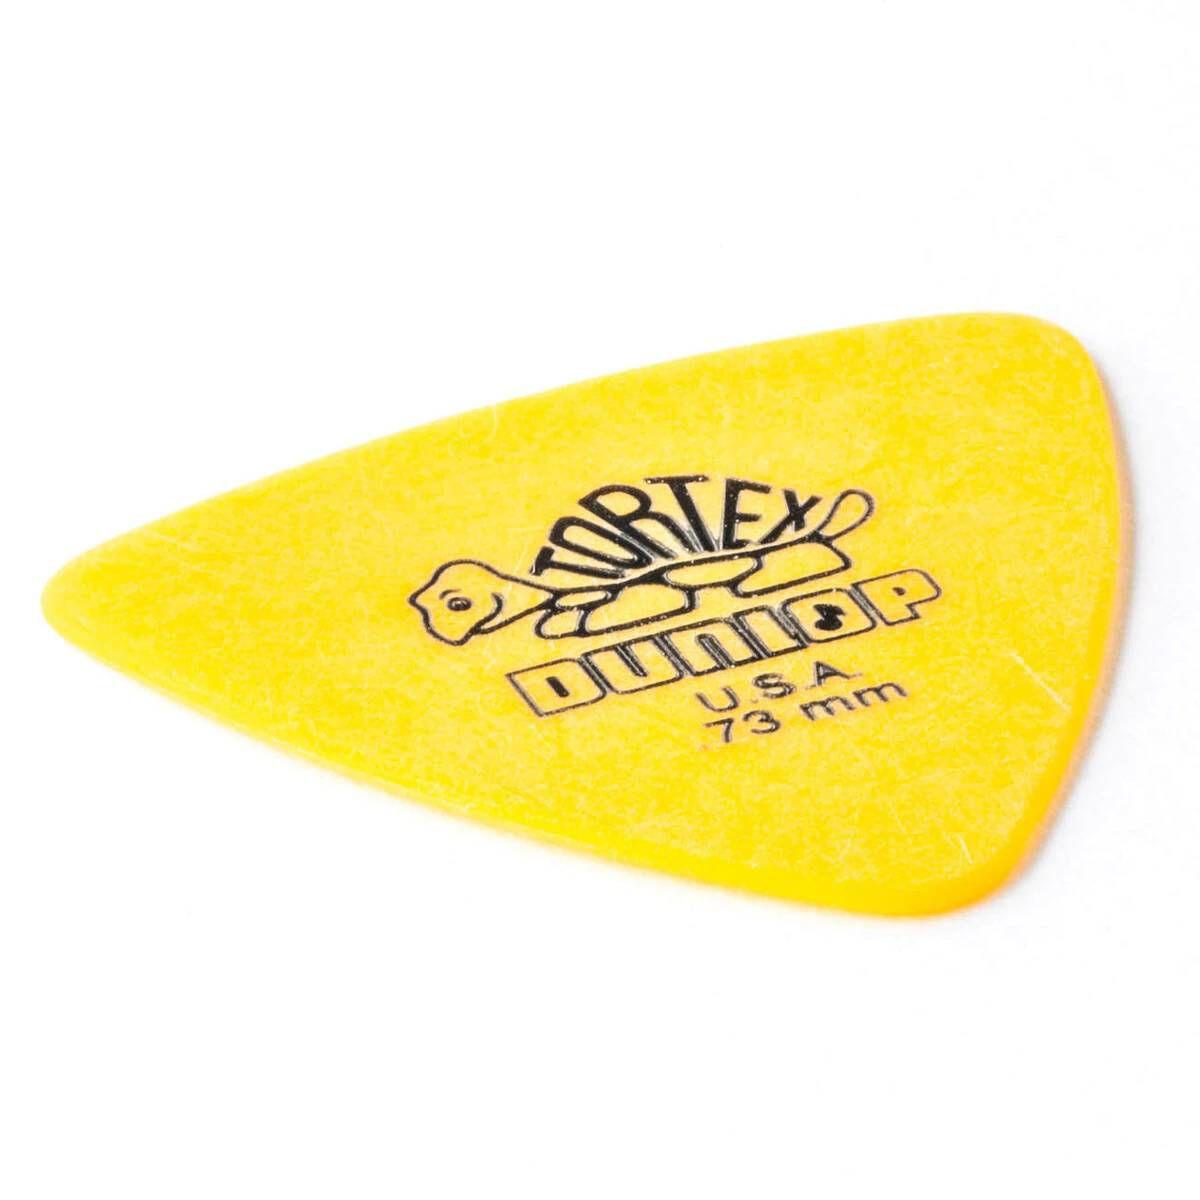 Dunlop .73mm Tortex Triangle - Muso's Stuff